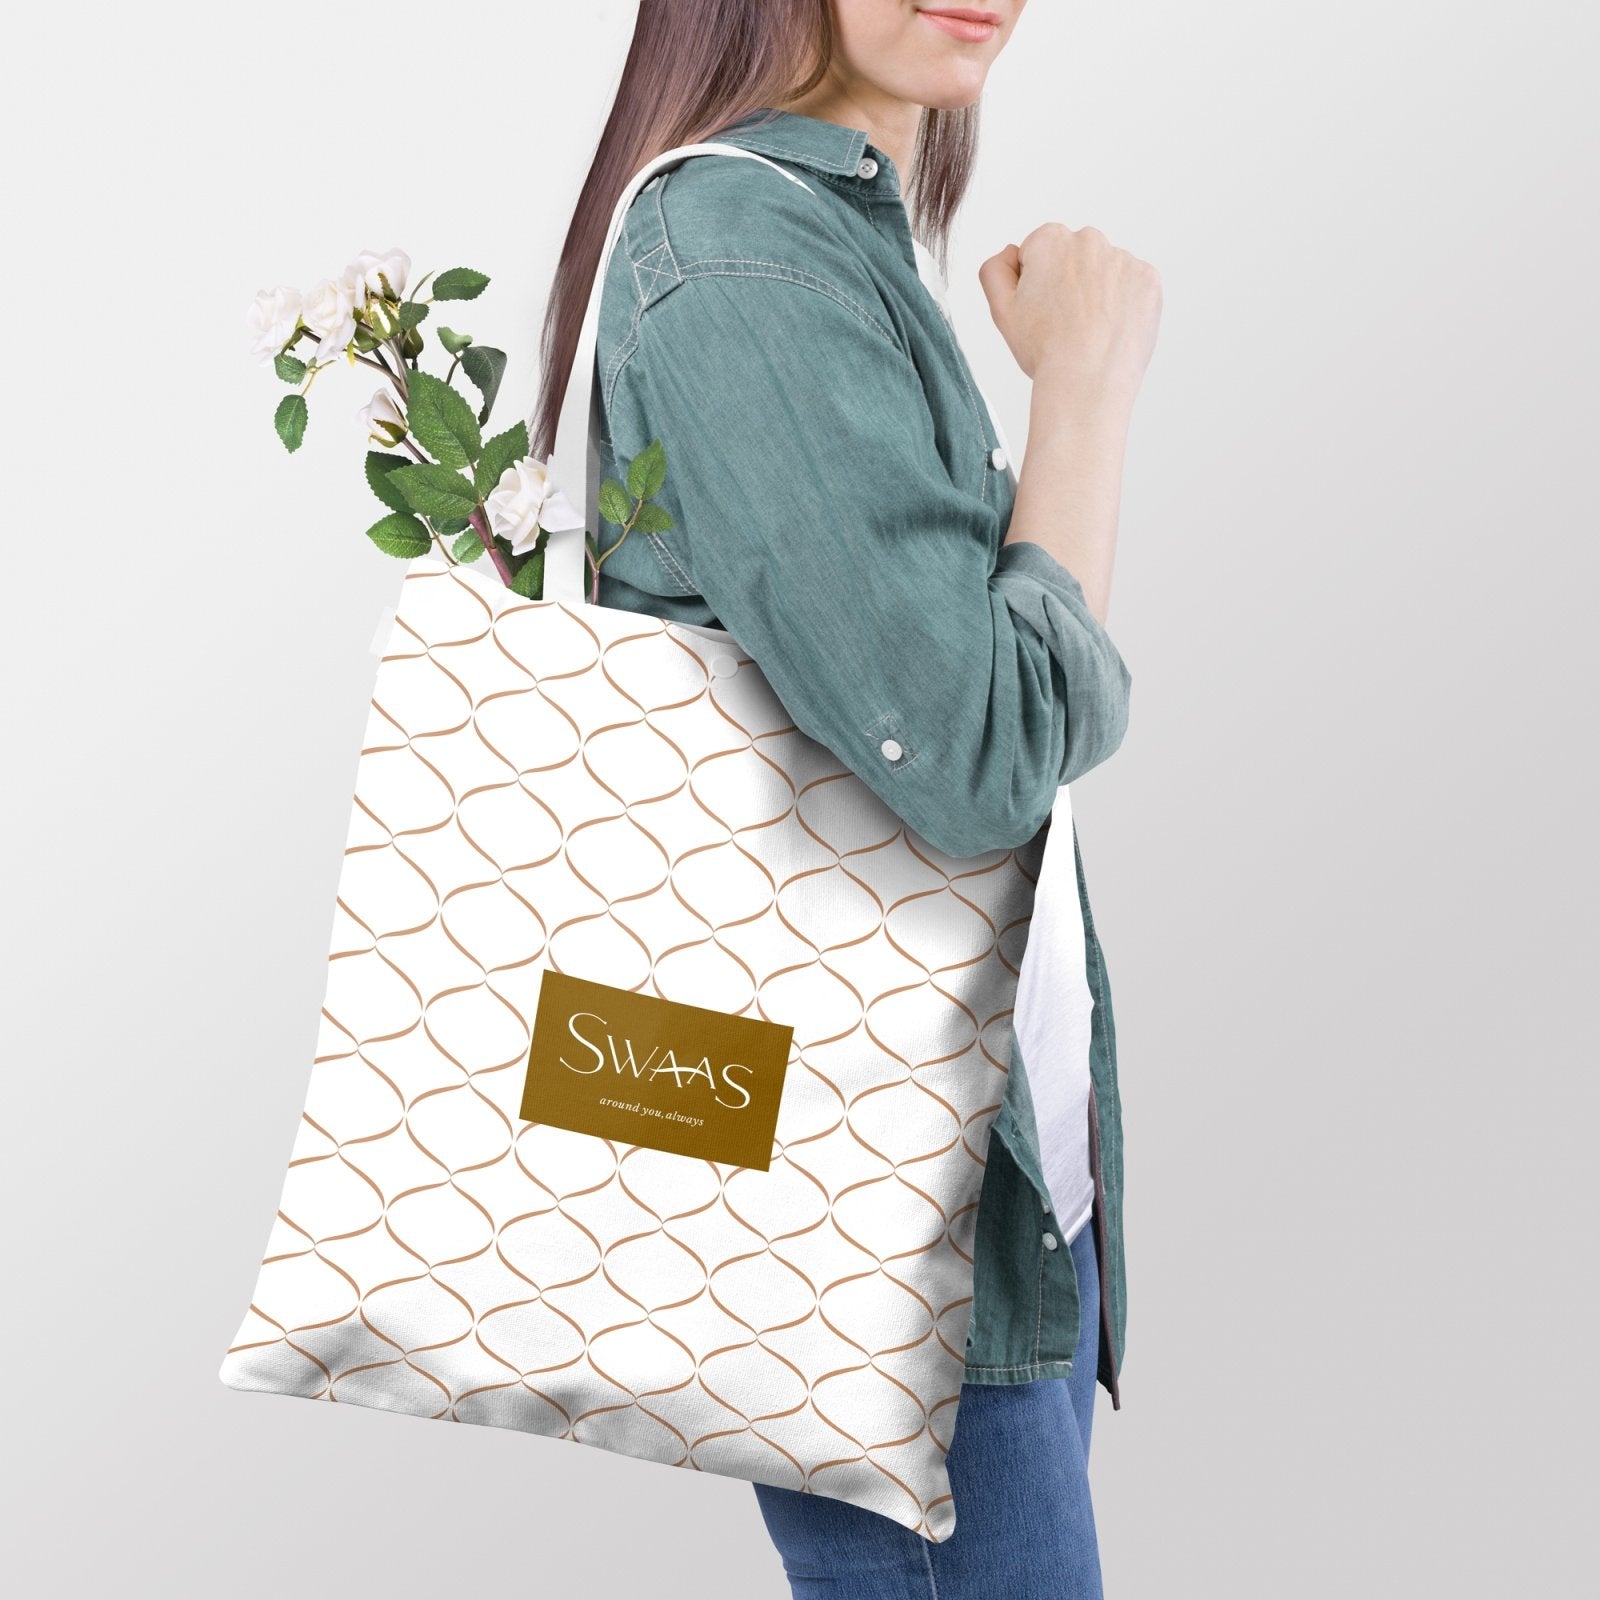 Swaas 100% Cotton Splash-Proof Ivory/Gold Tote Bag for Women - hfnl!fe